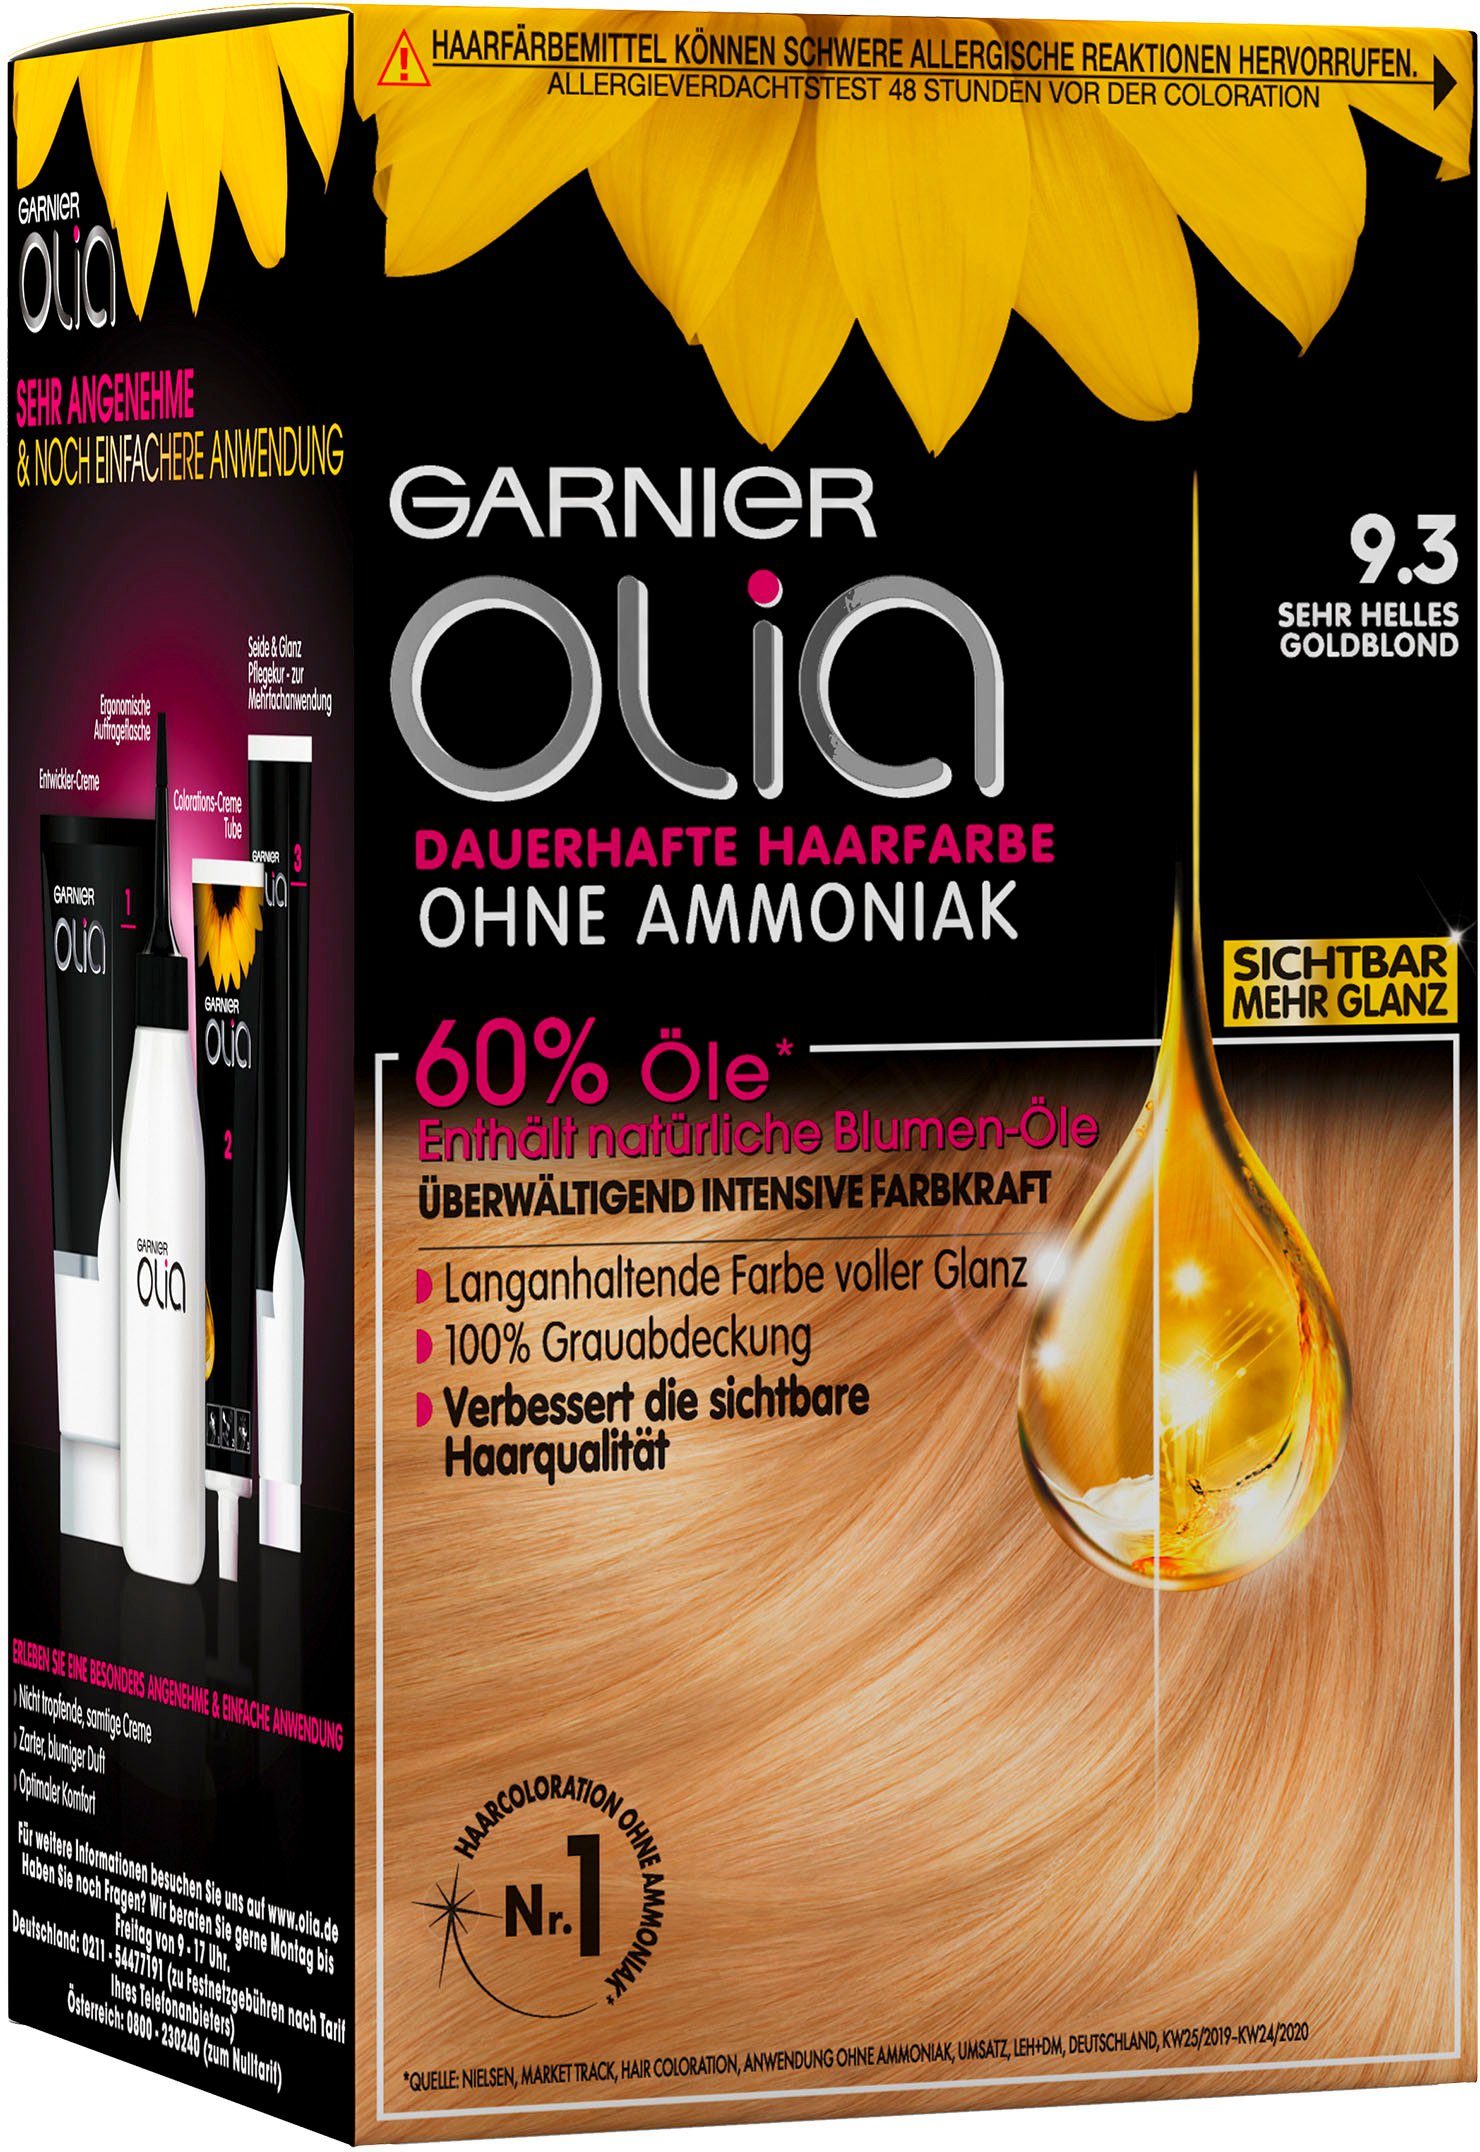 goldblond Olia 9.3 GARNIER dauerhafte Haarfarbe Sehr Coloration helles